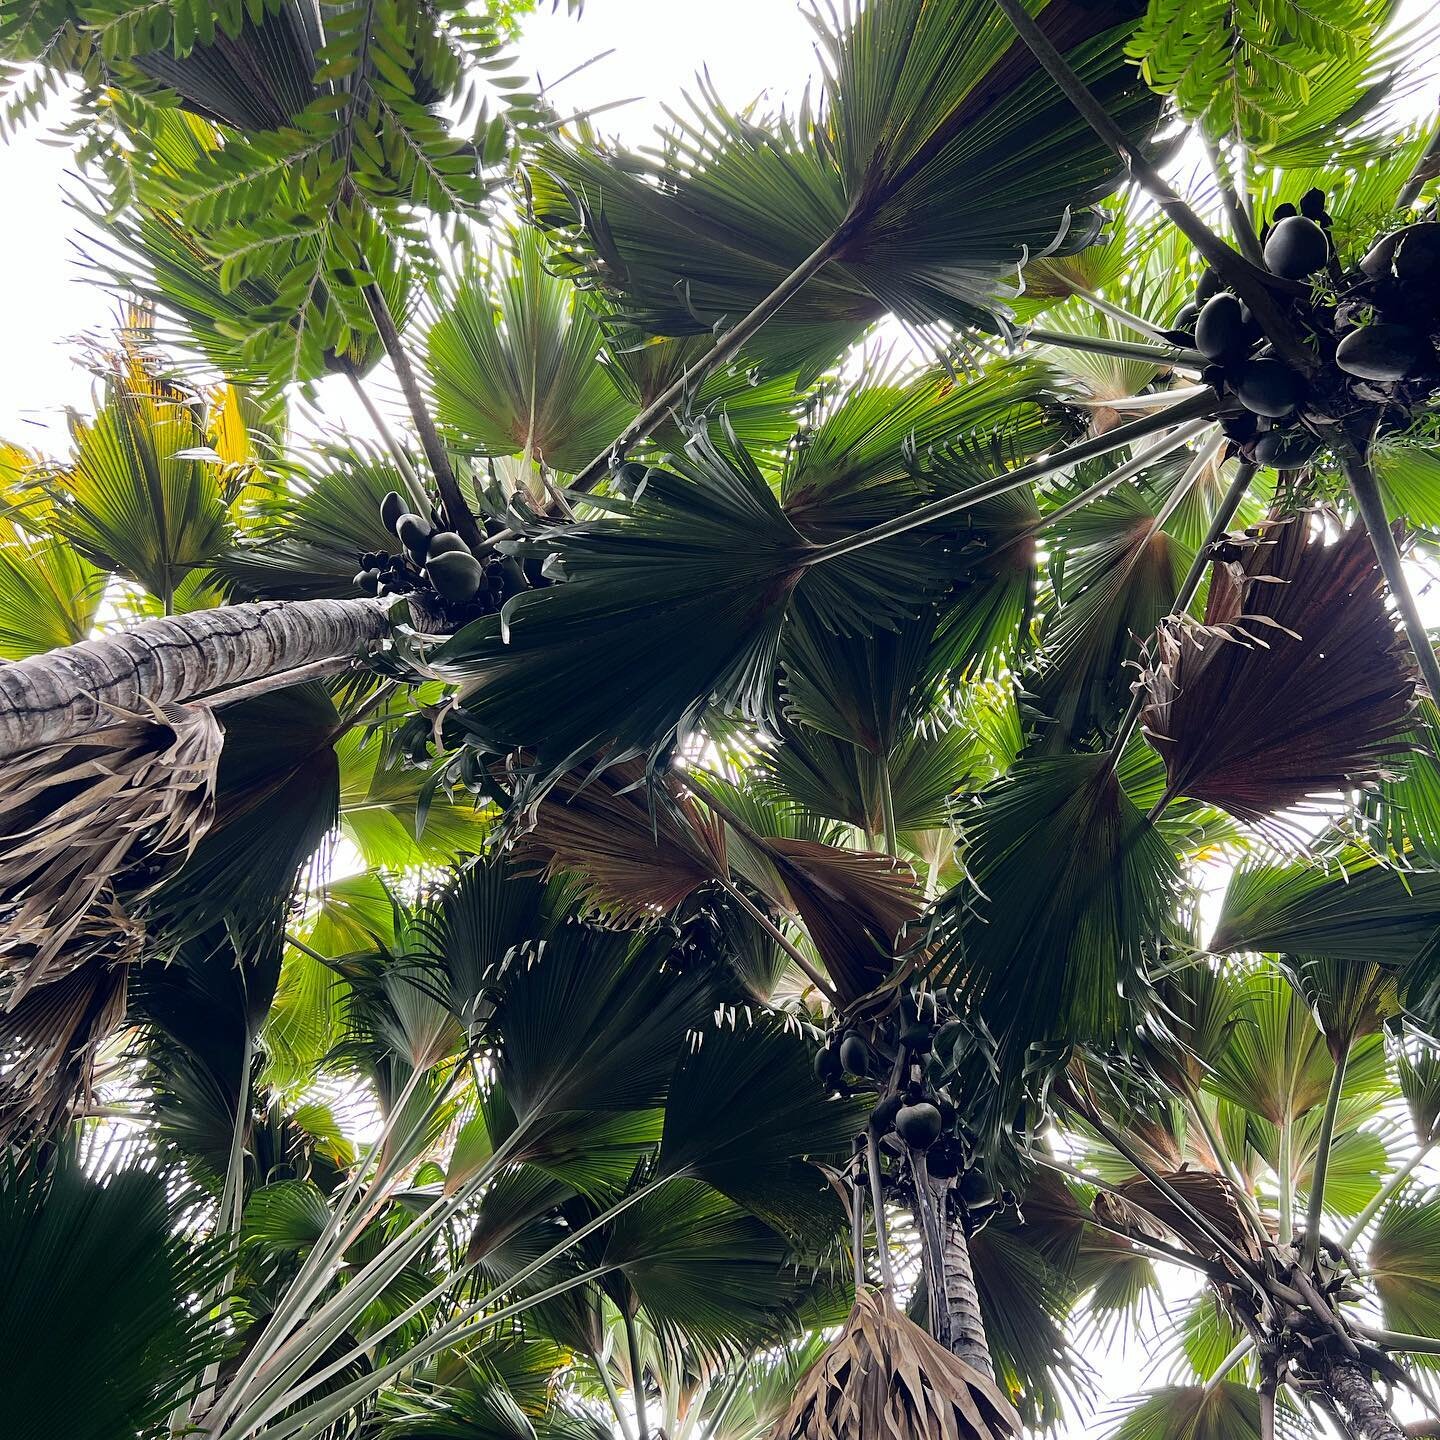 Look up! Coco de mer palms at Fond Ferdinand nature reserve

#seychellesislands #visitseychelles #praslinvacation #seychelles #paradise #selfcatering #cotedor #praslin #mahe #beachlife #thisislife #sale #footprintsseychelles #travel #seychellestravel